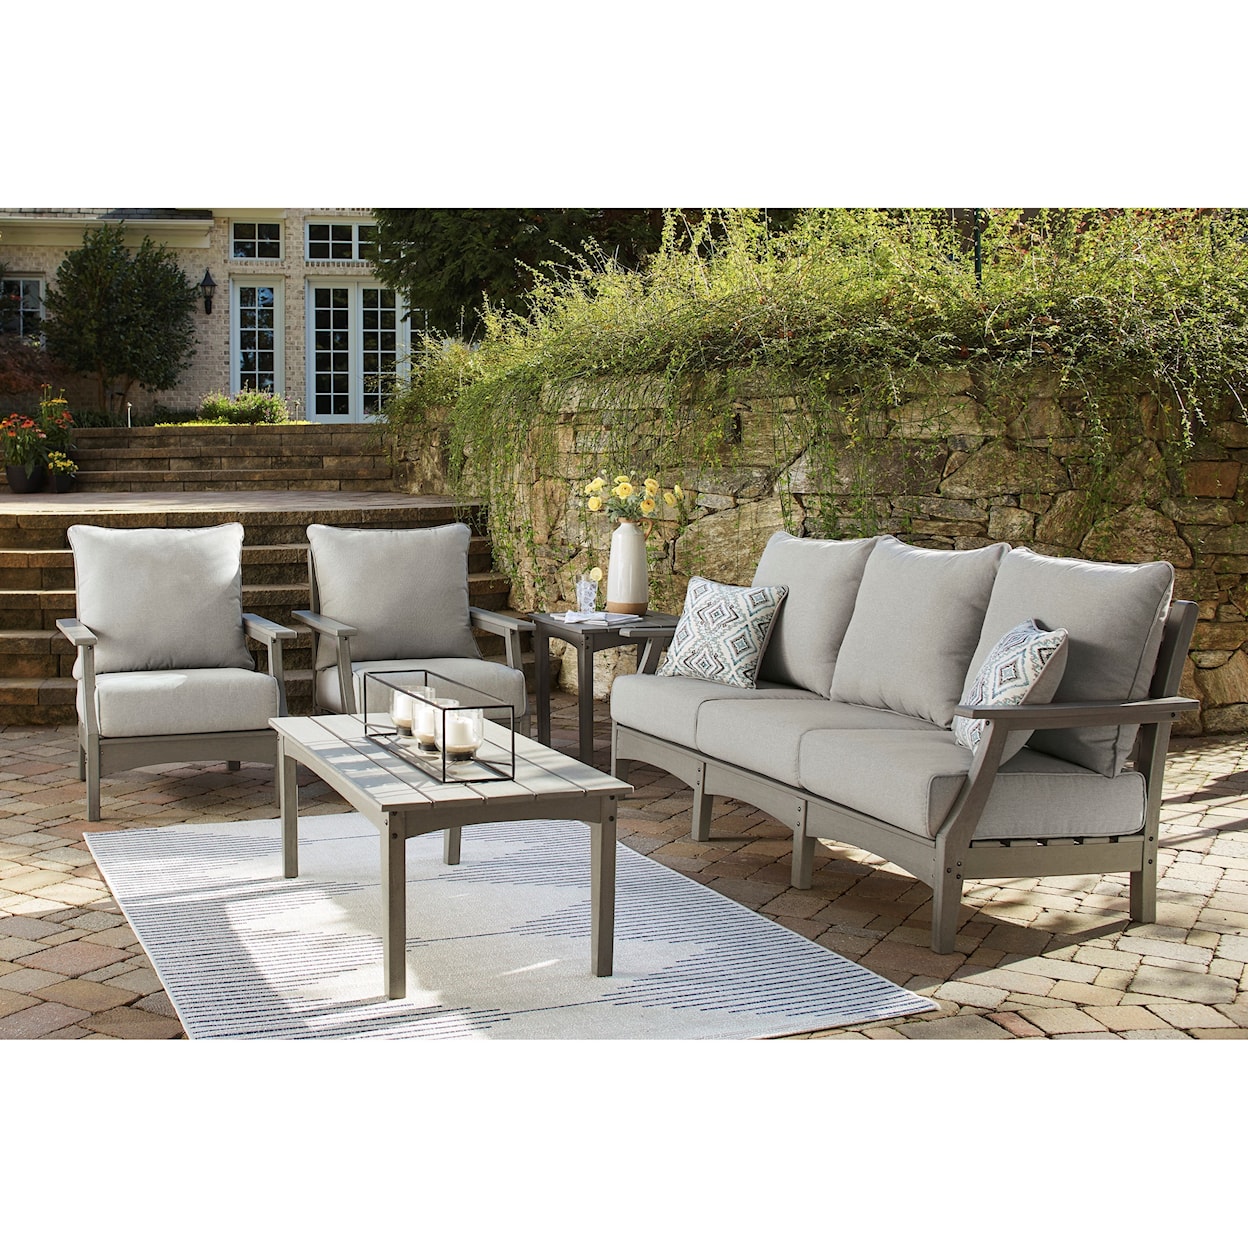 Michael Alan Select Visola Outdoor Sofa, 2 Chairs, and Table Set